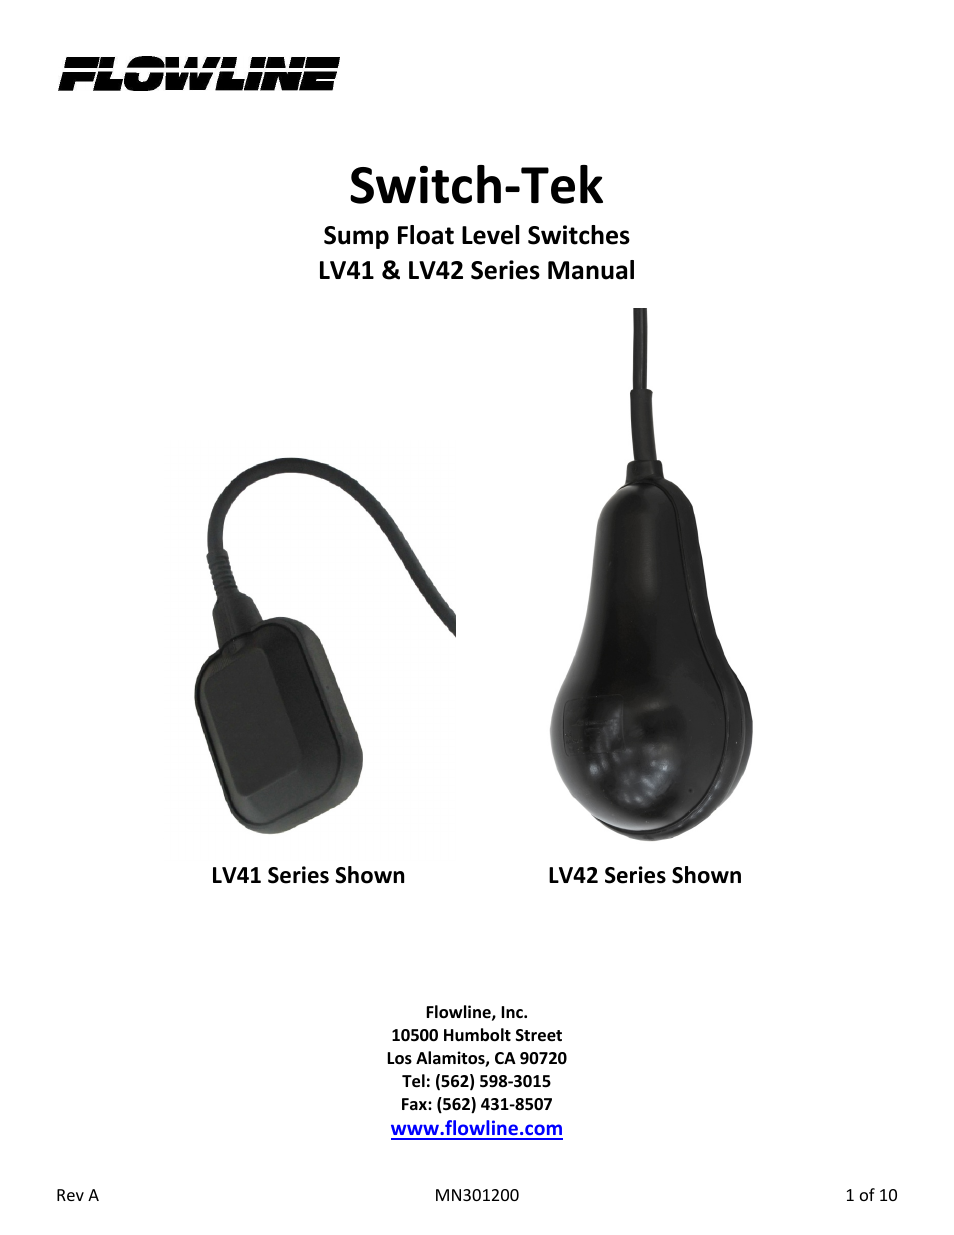 LV42 Switch-Tek